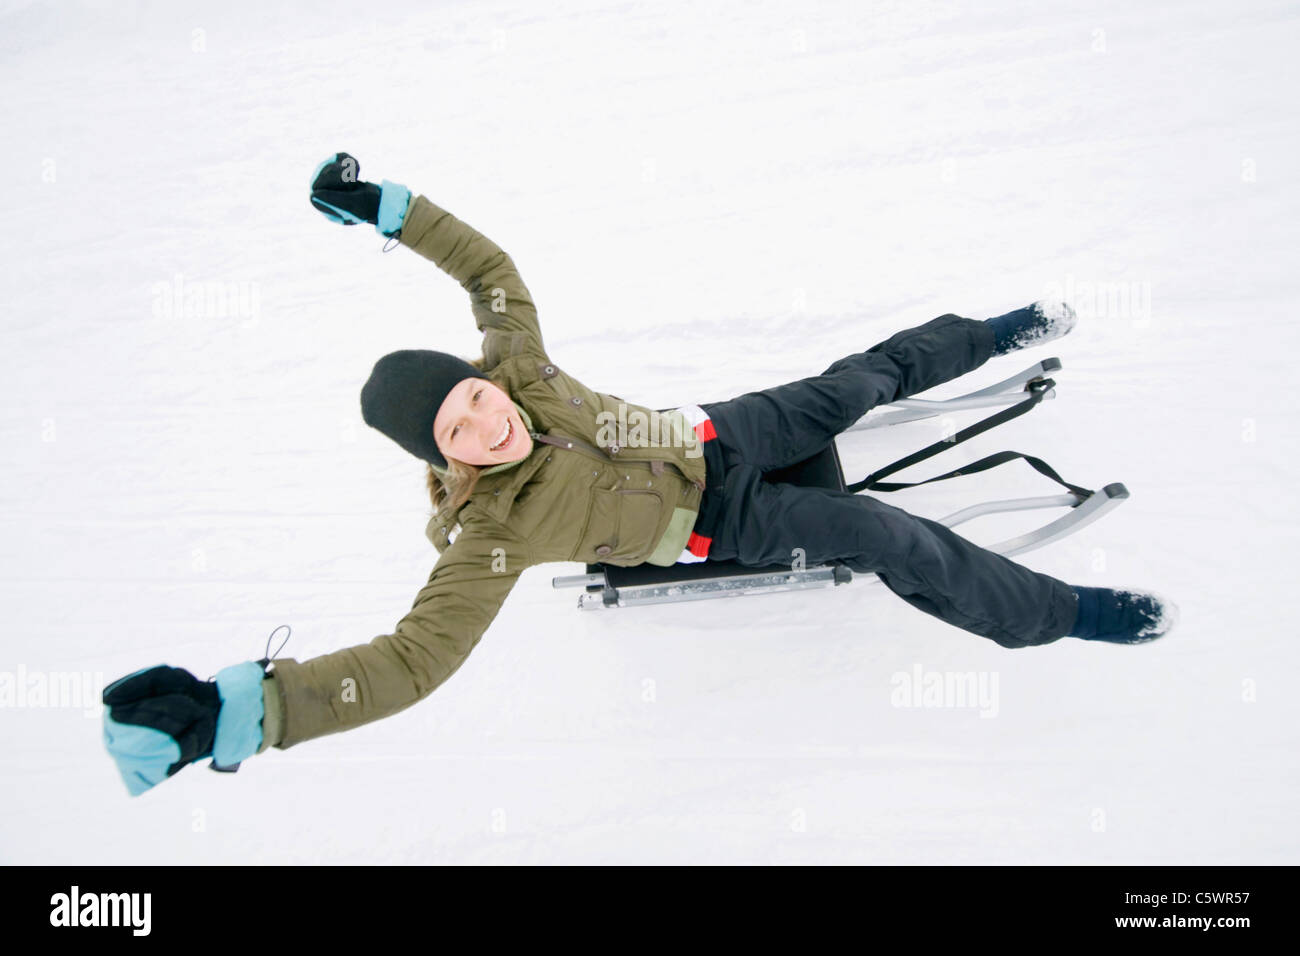 Italy, South Tyrol, Seiseralm, Girl (12-13) sledding downhill, portrait Stock Photo